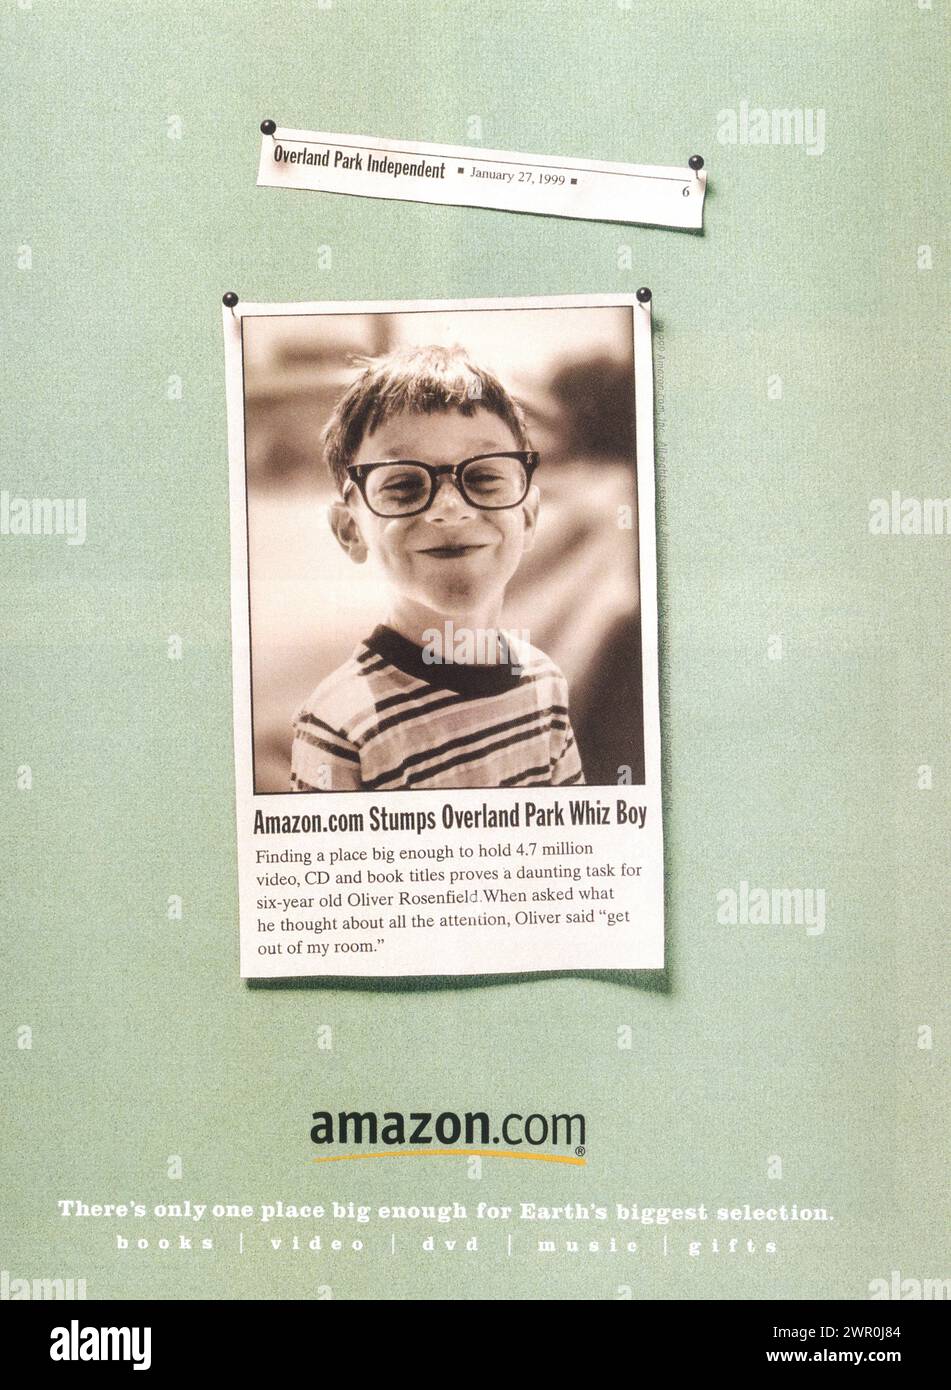 1999 Amazon print ad - earth's biggest selection... Overland park whiz boy Stock Photo